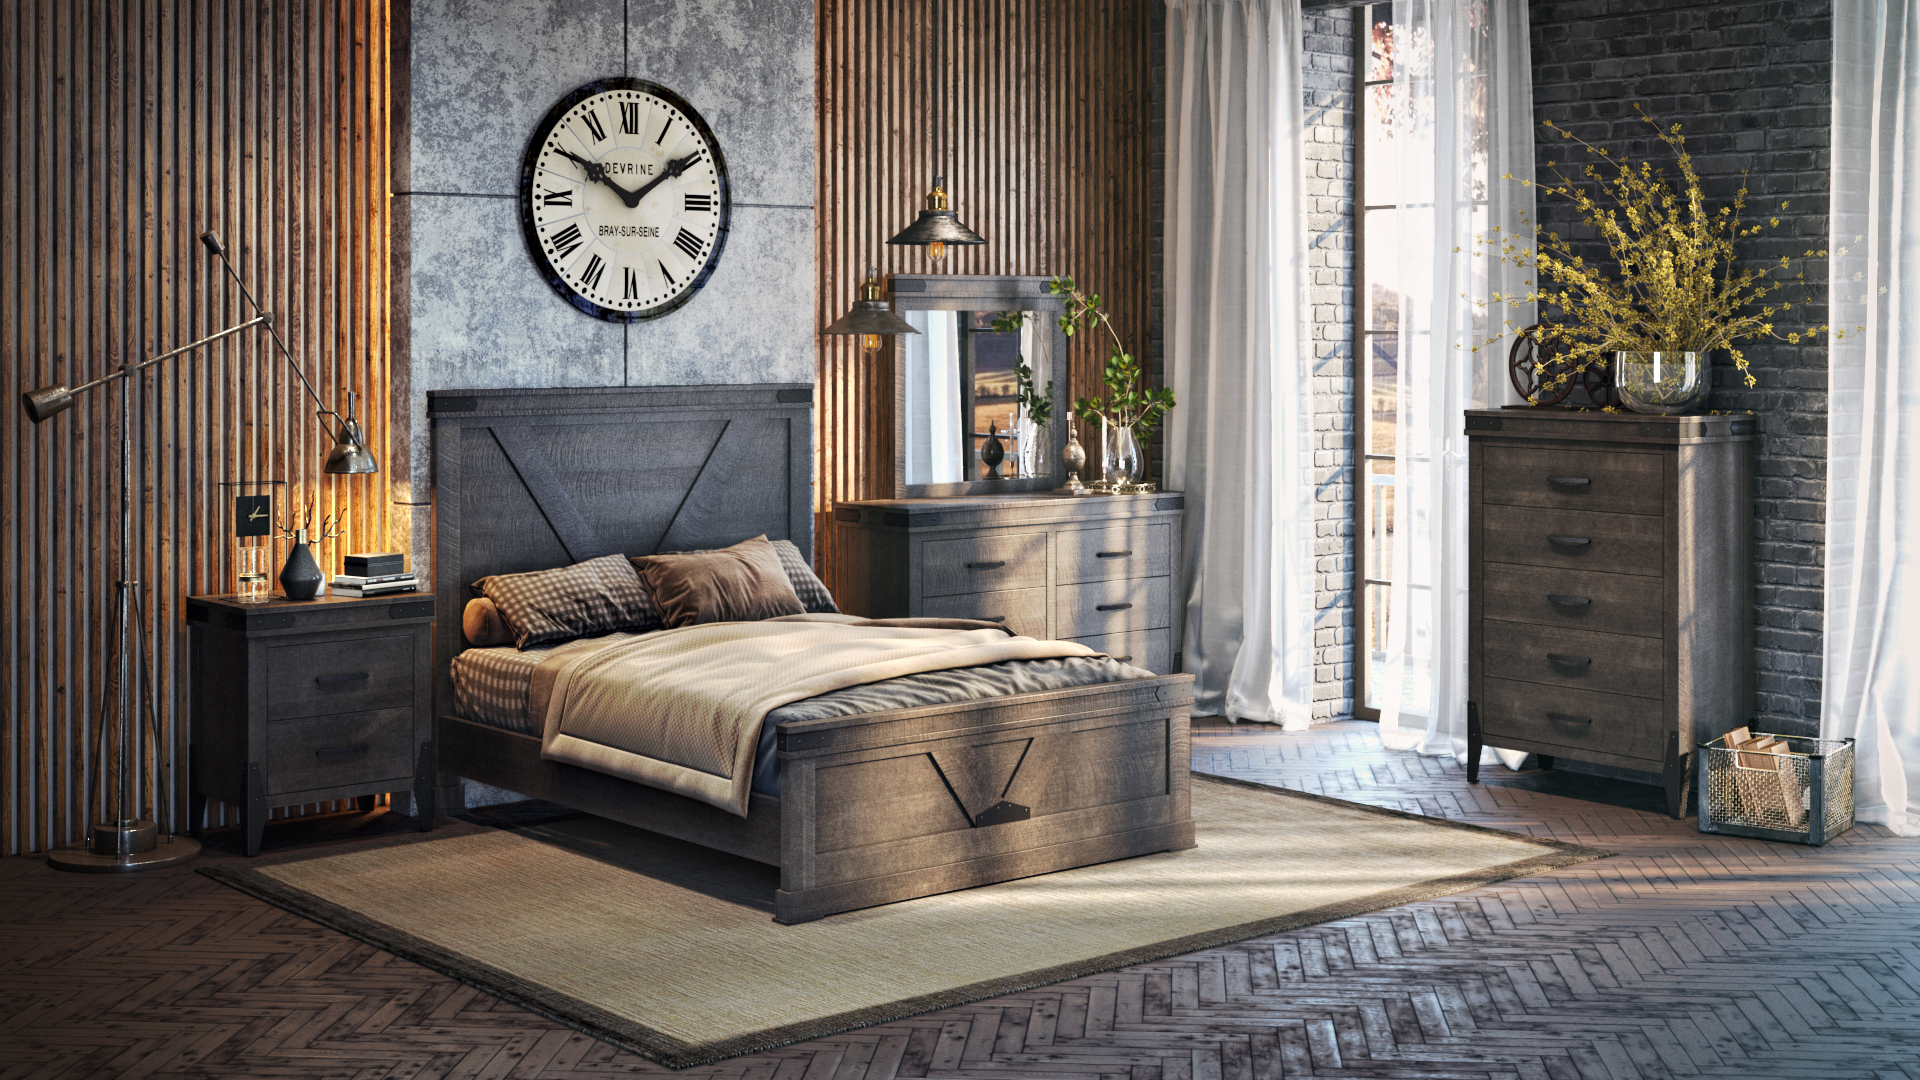 Photorealistic Roomset Rendering for Furniture Design